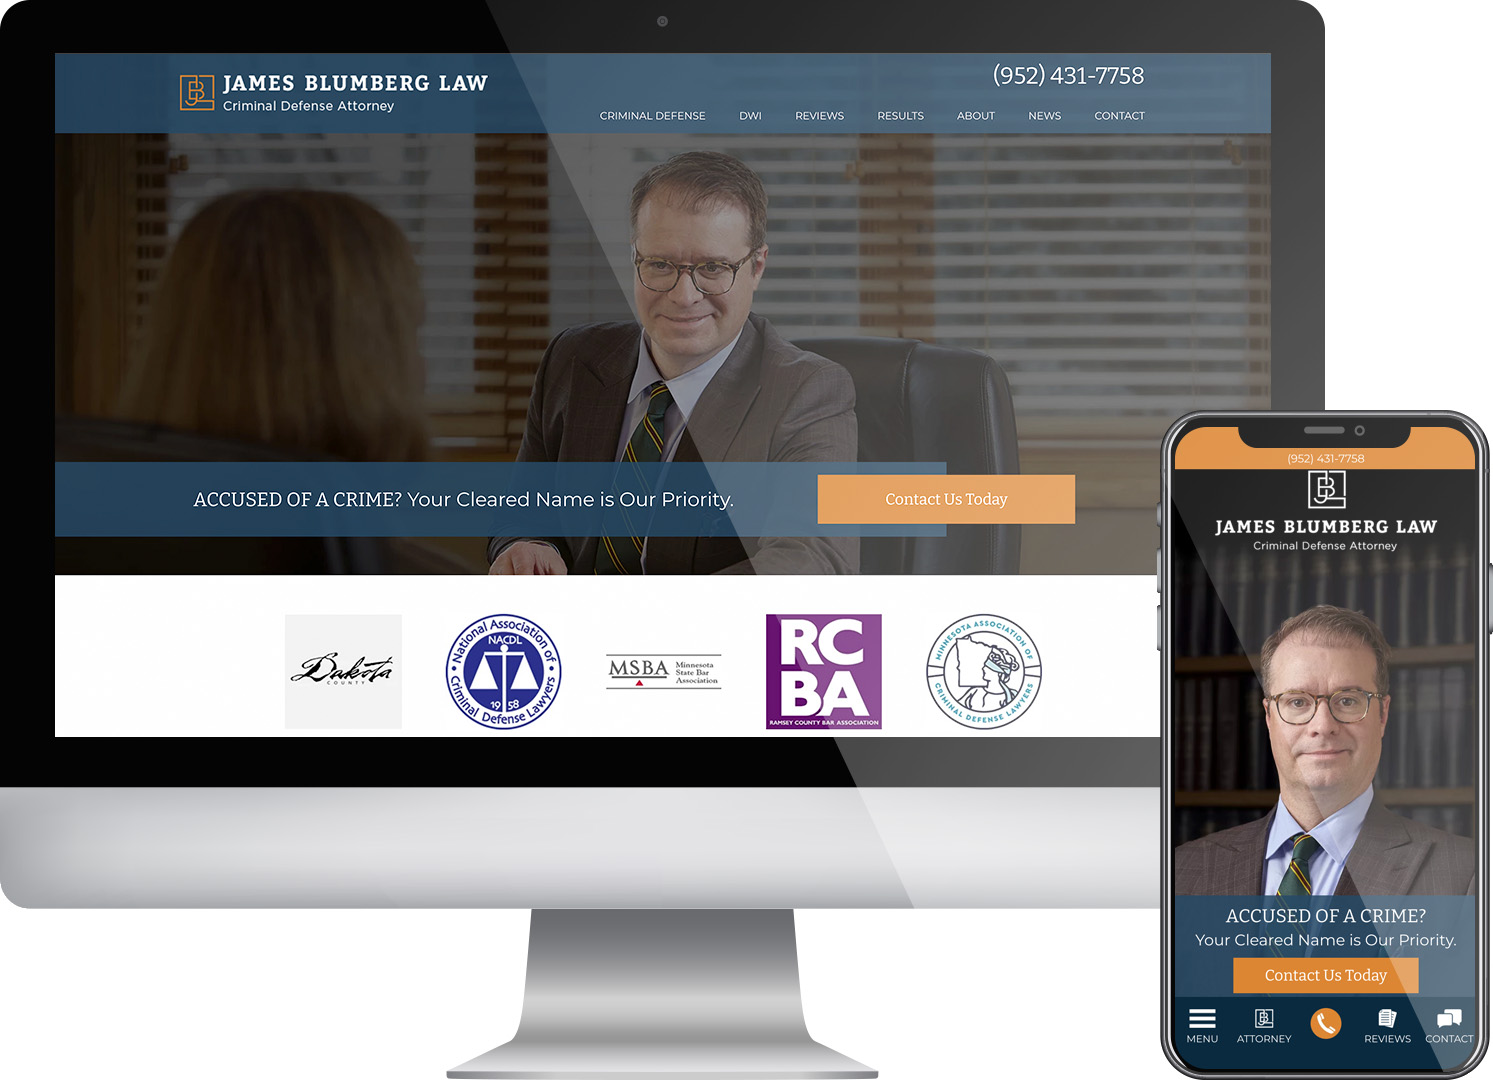 James Blumberg Law - Website screenshots